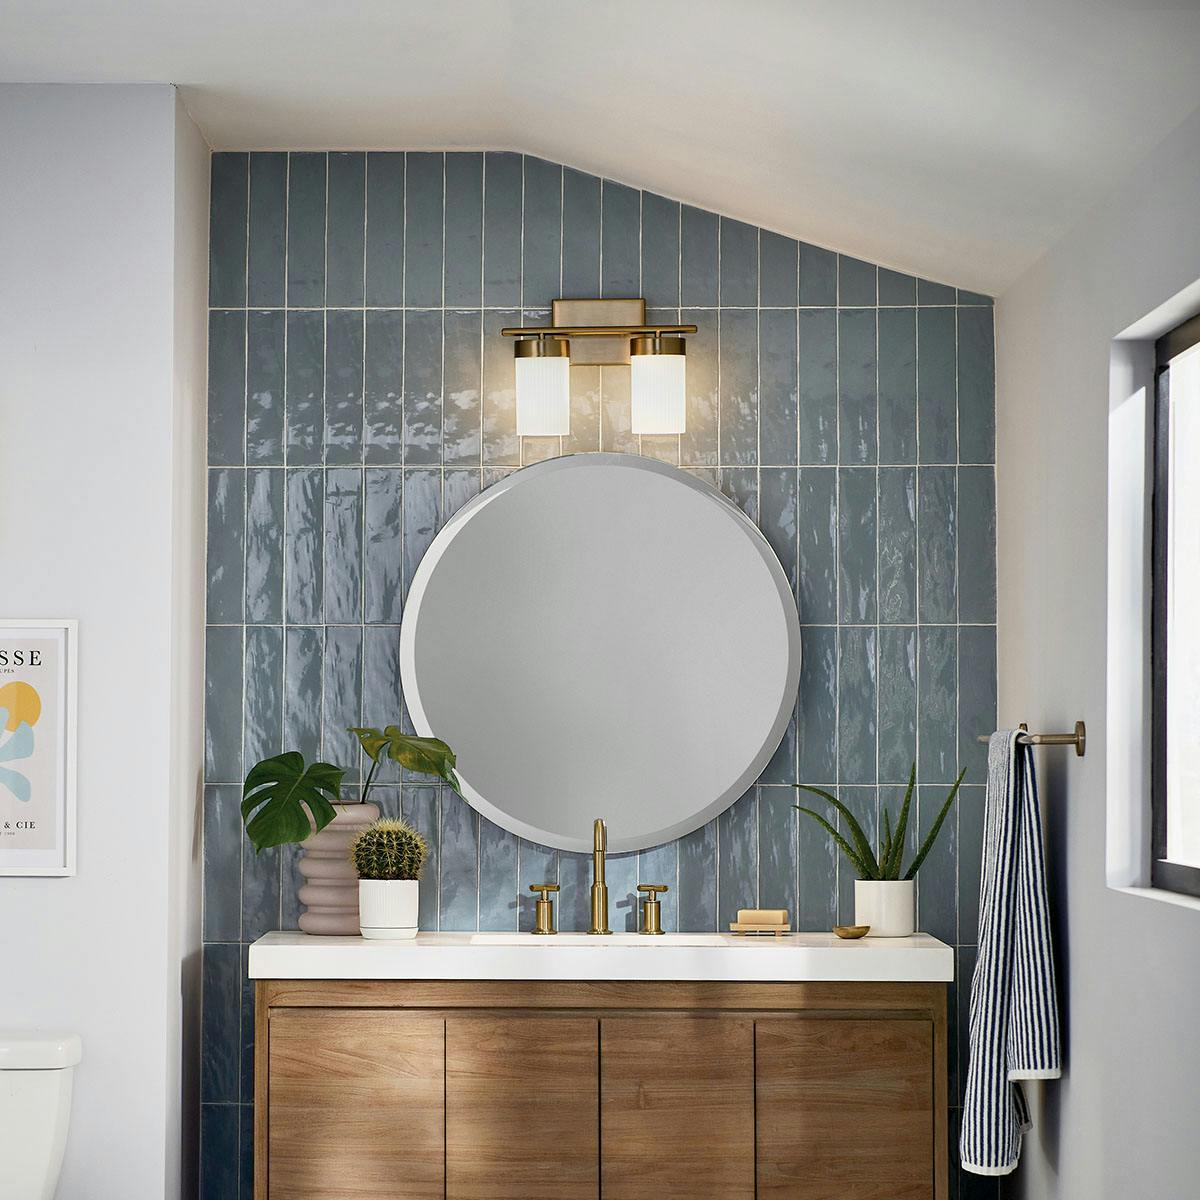 Day time Bathroom image featuring Ciona vanity light 55111BNB